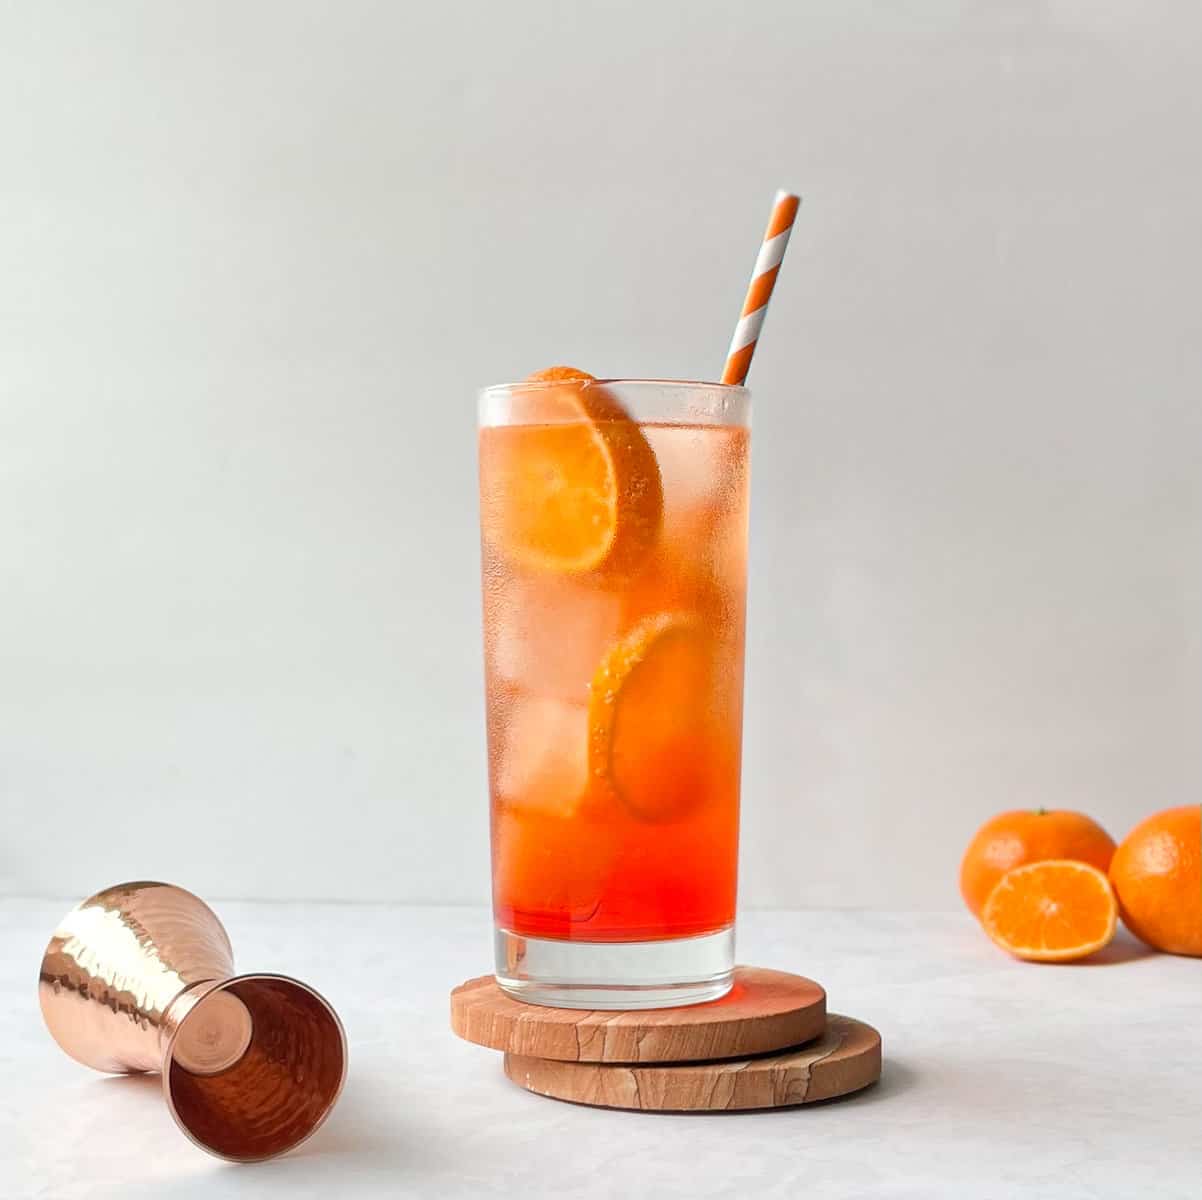 orange highball cocktail with orange slices, ice cubes, and orange striped straw.